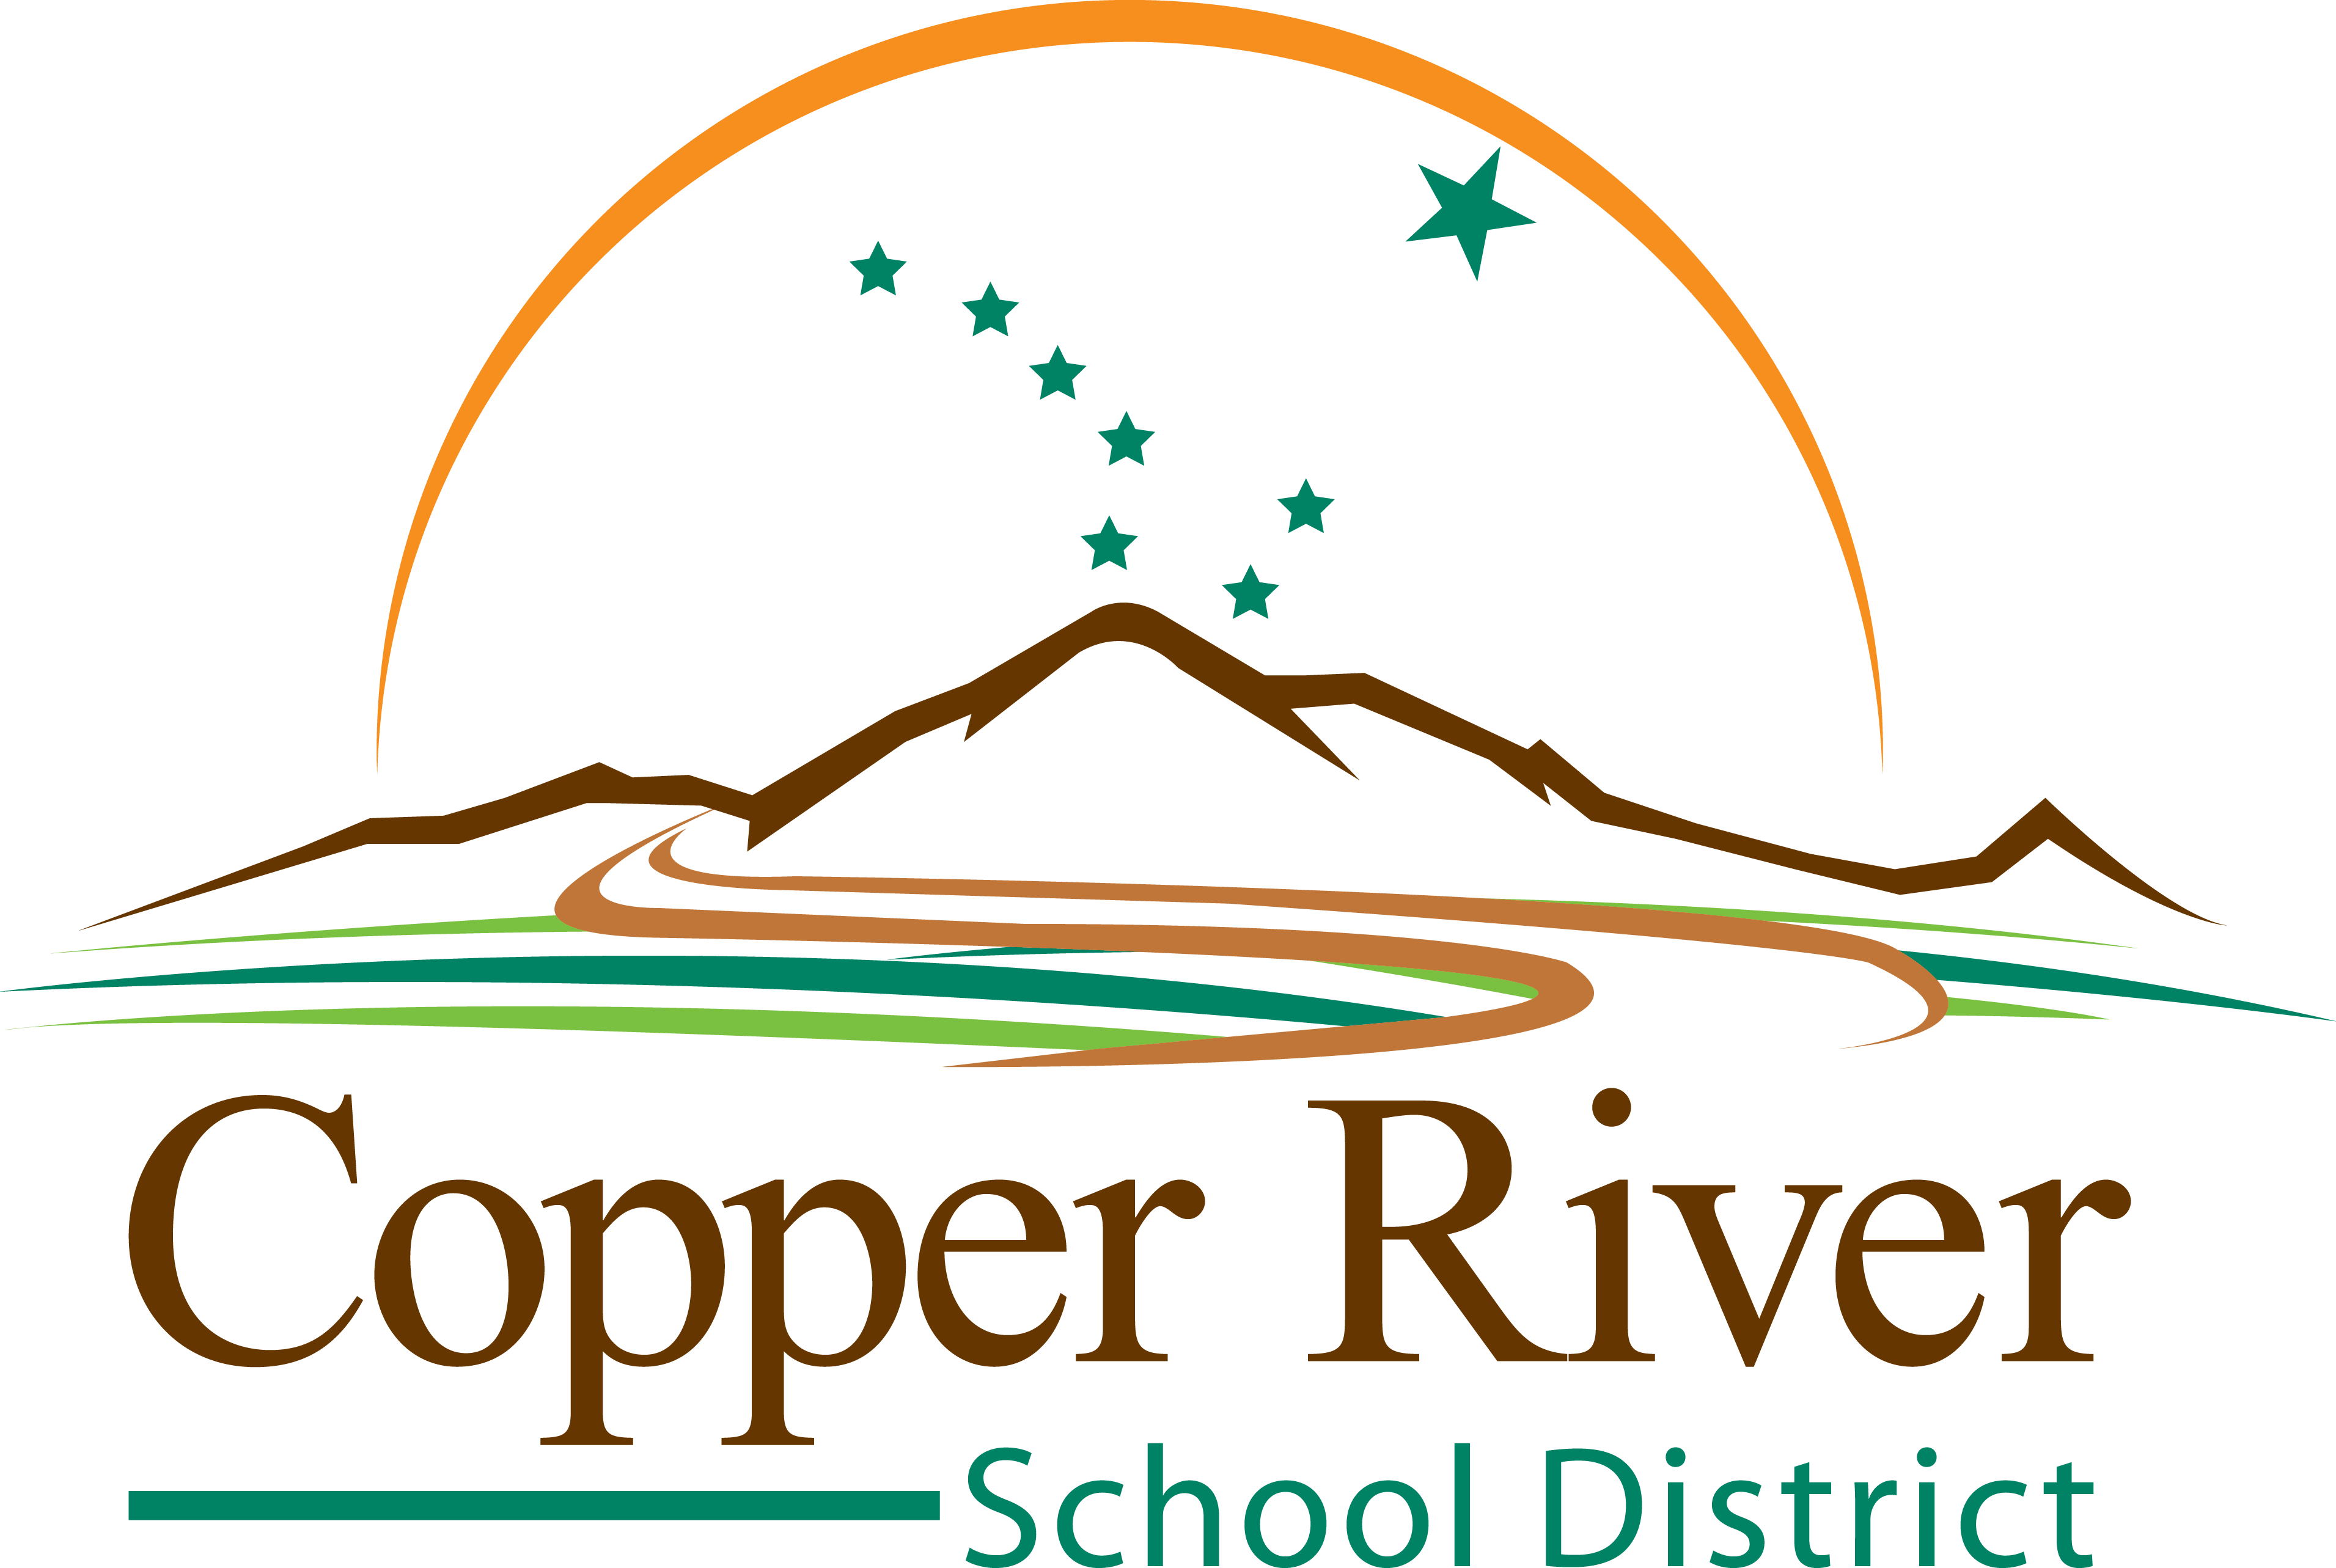 Copper River School District logo.